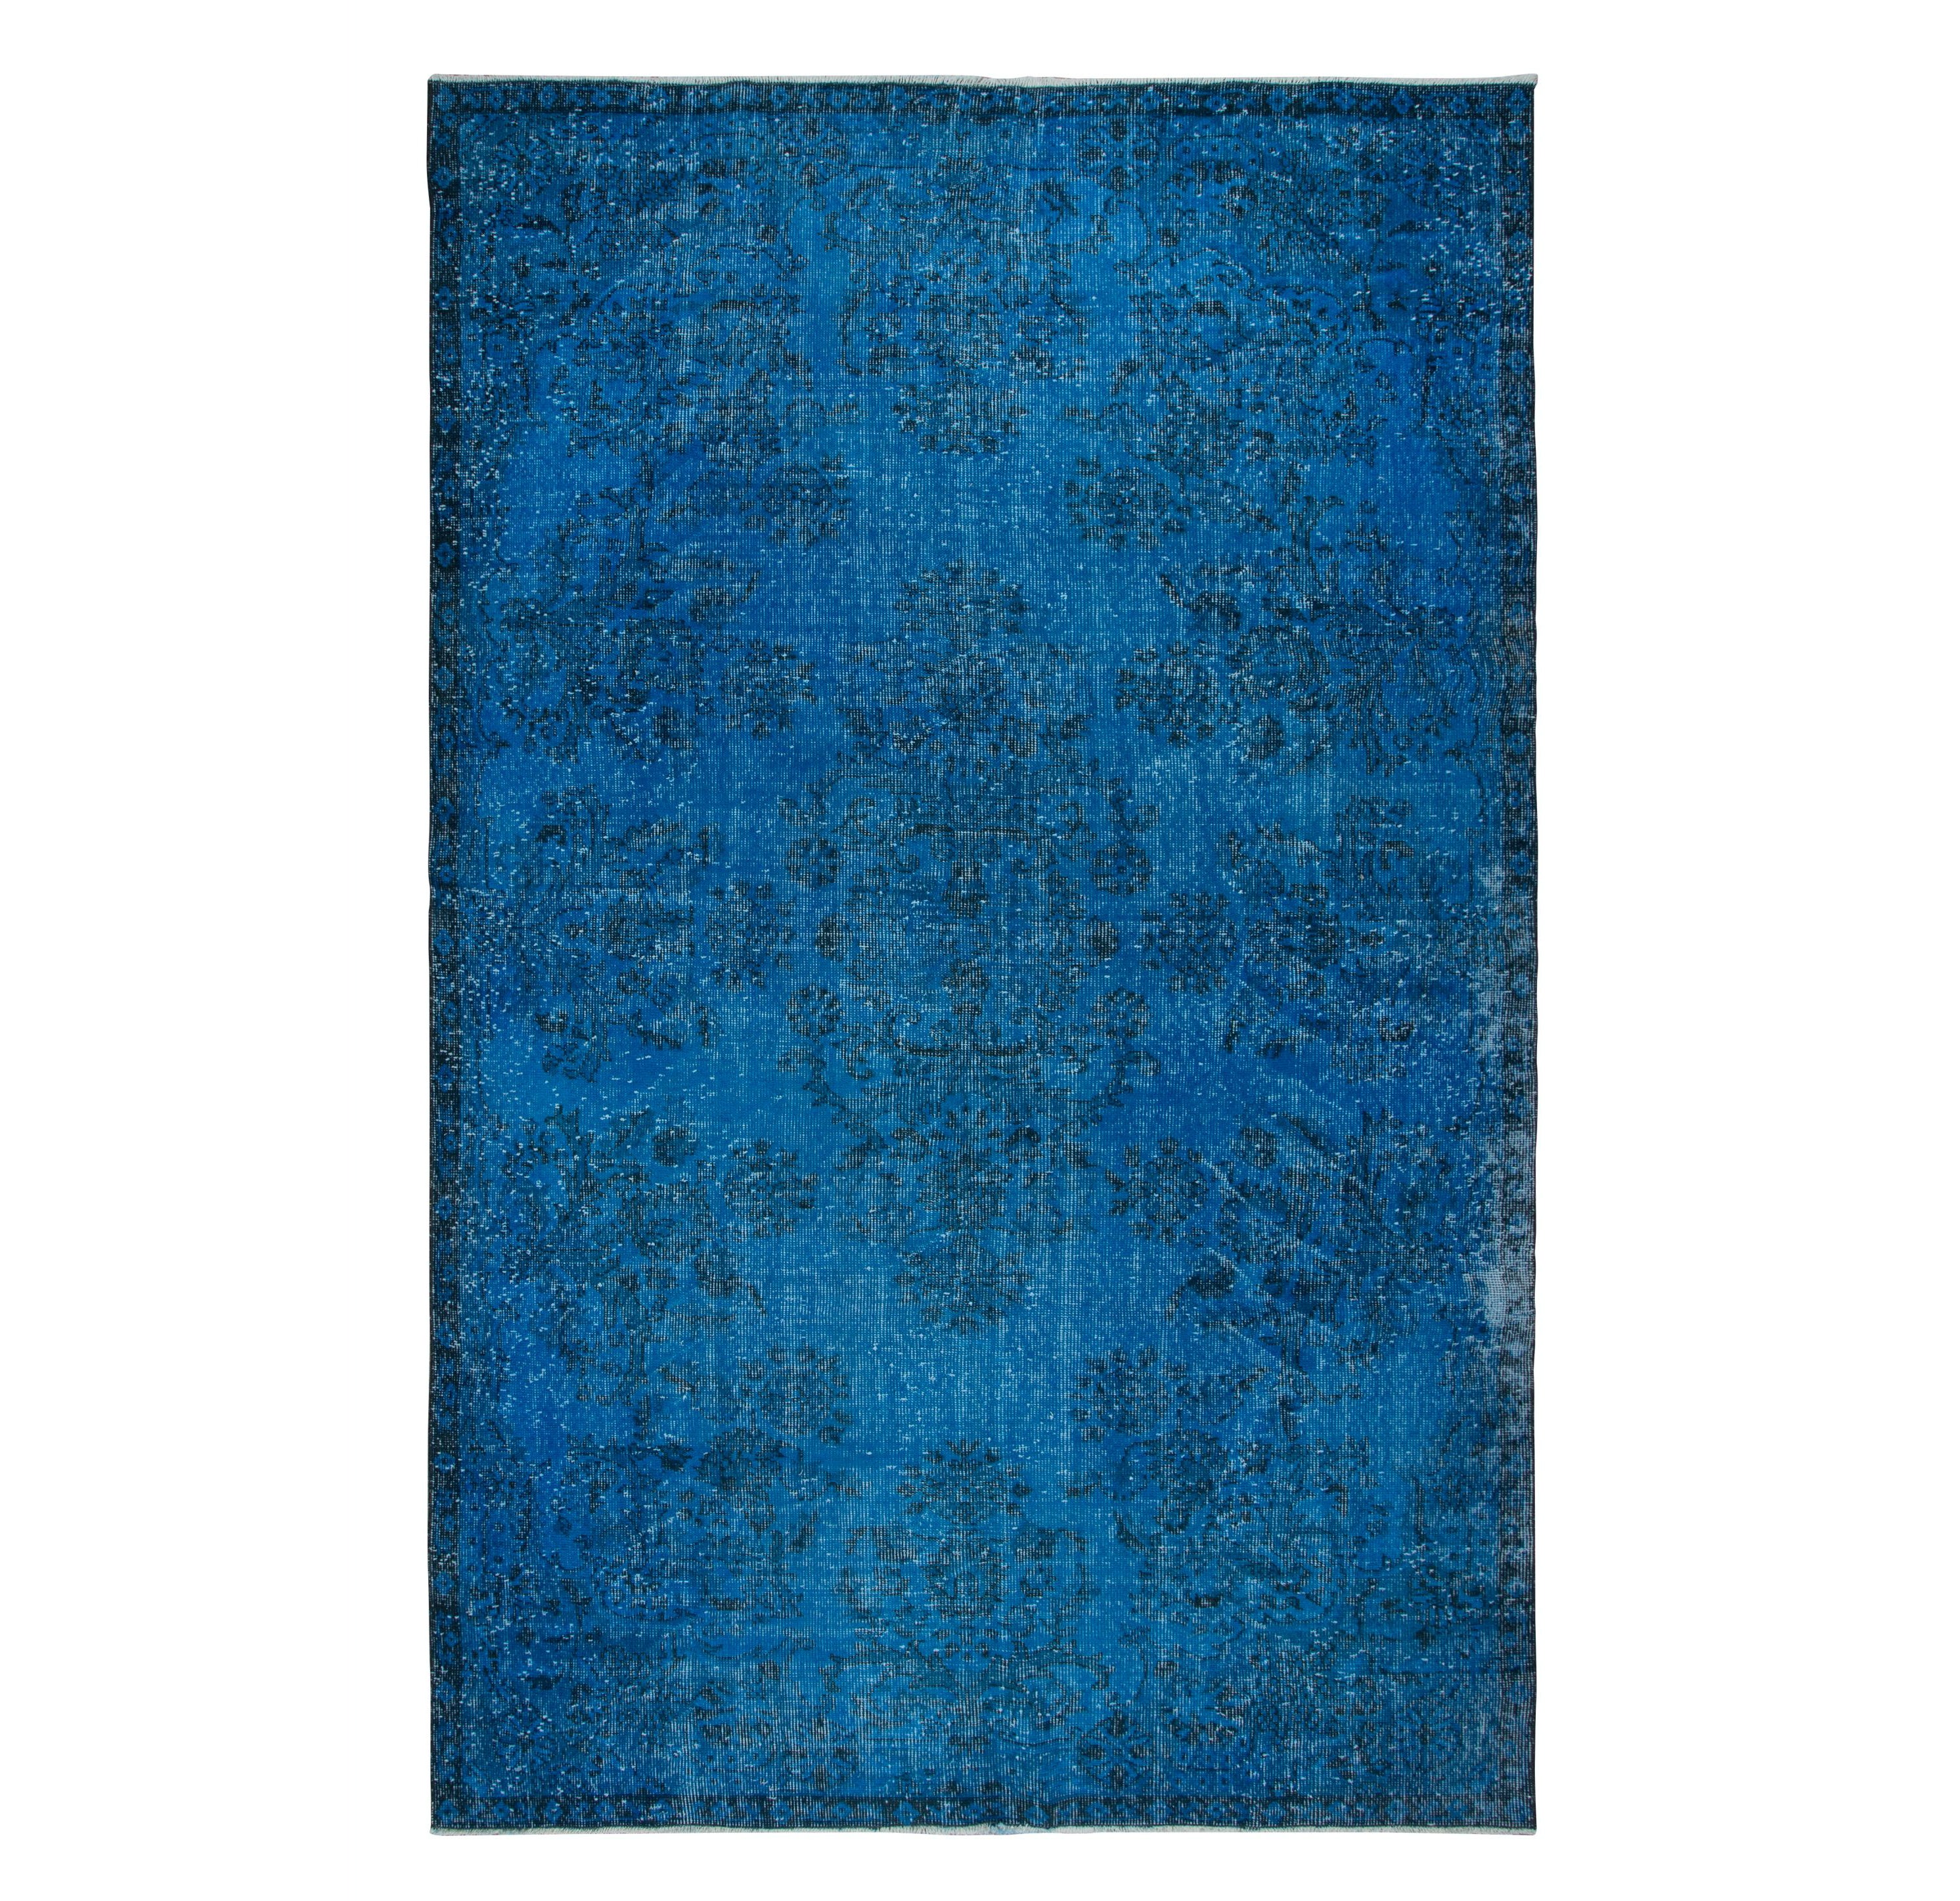 6x9.8 Ft Turkish Area Rug in Blue for Dining Room, Handmade Garden Design Carpet